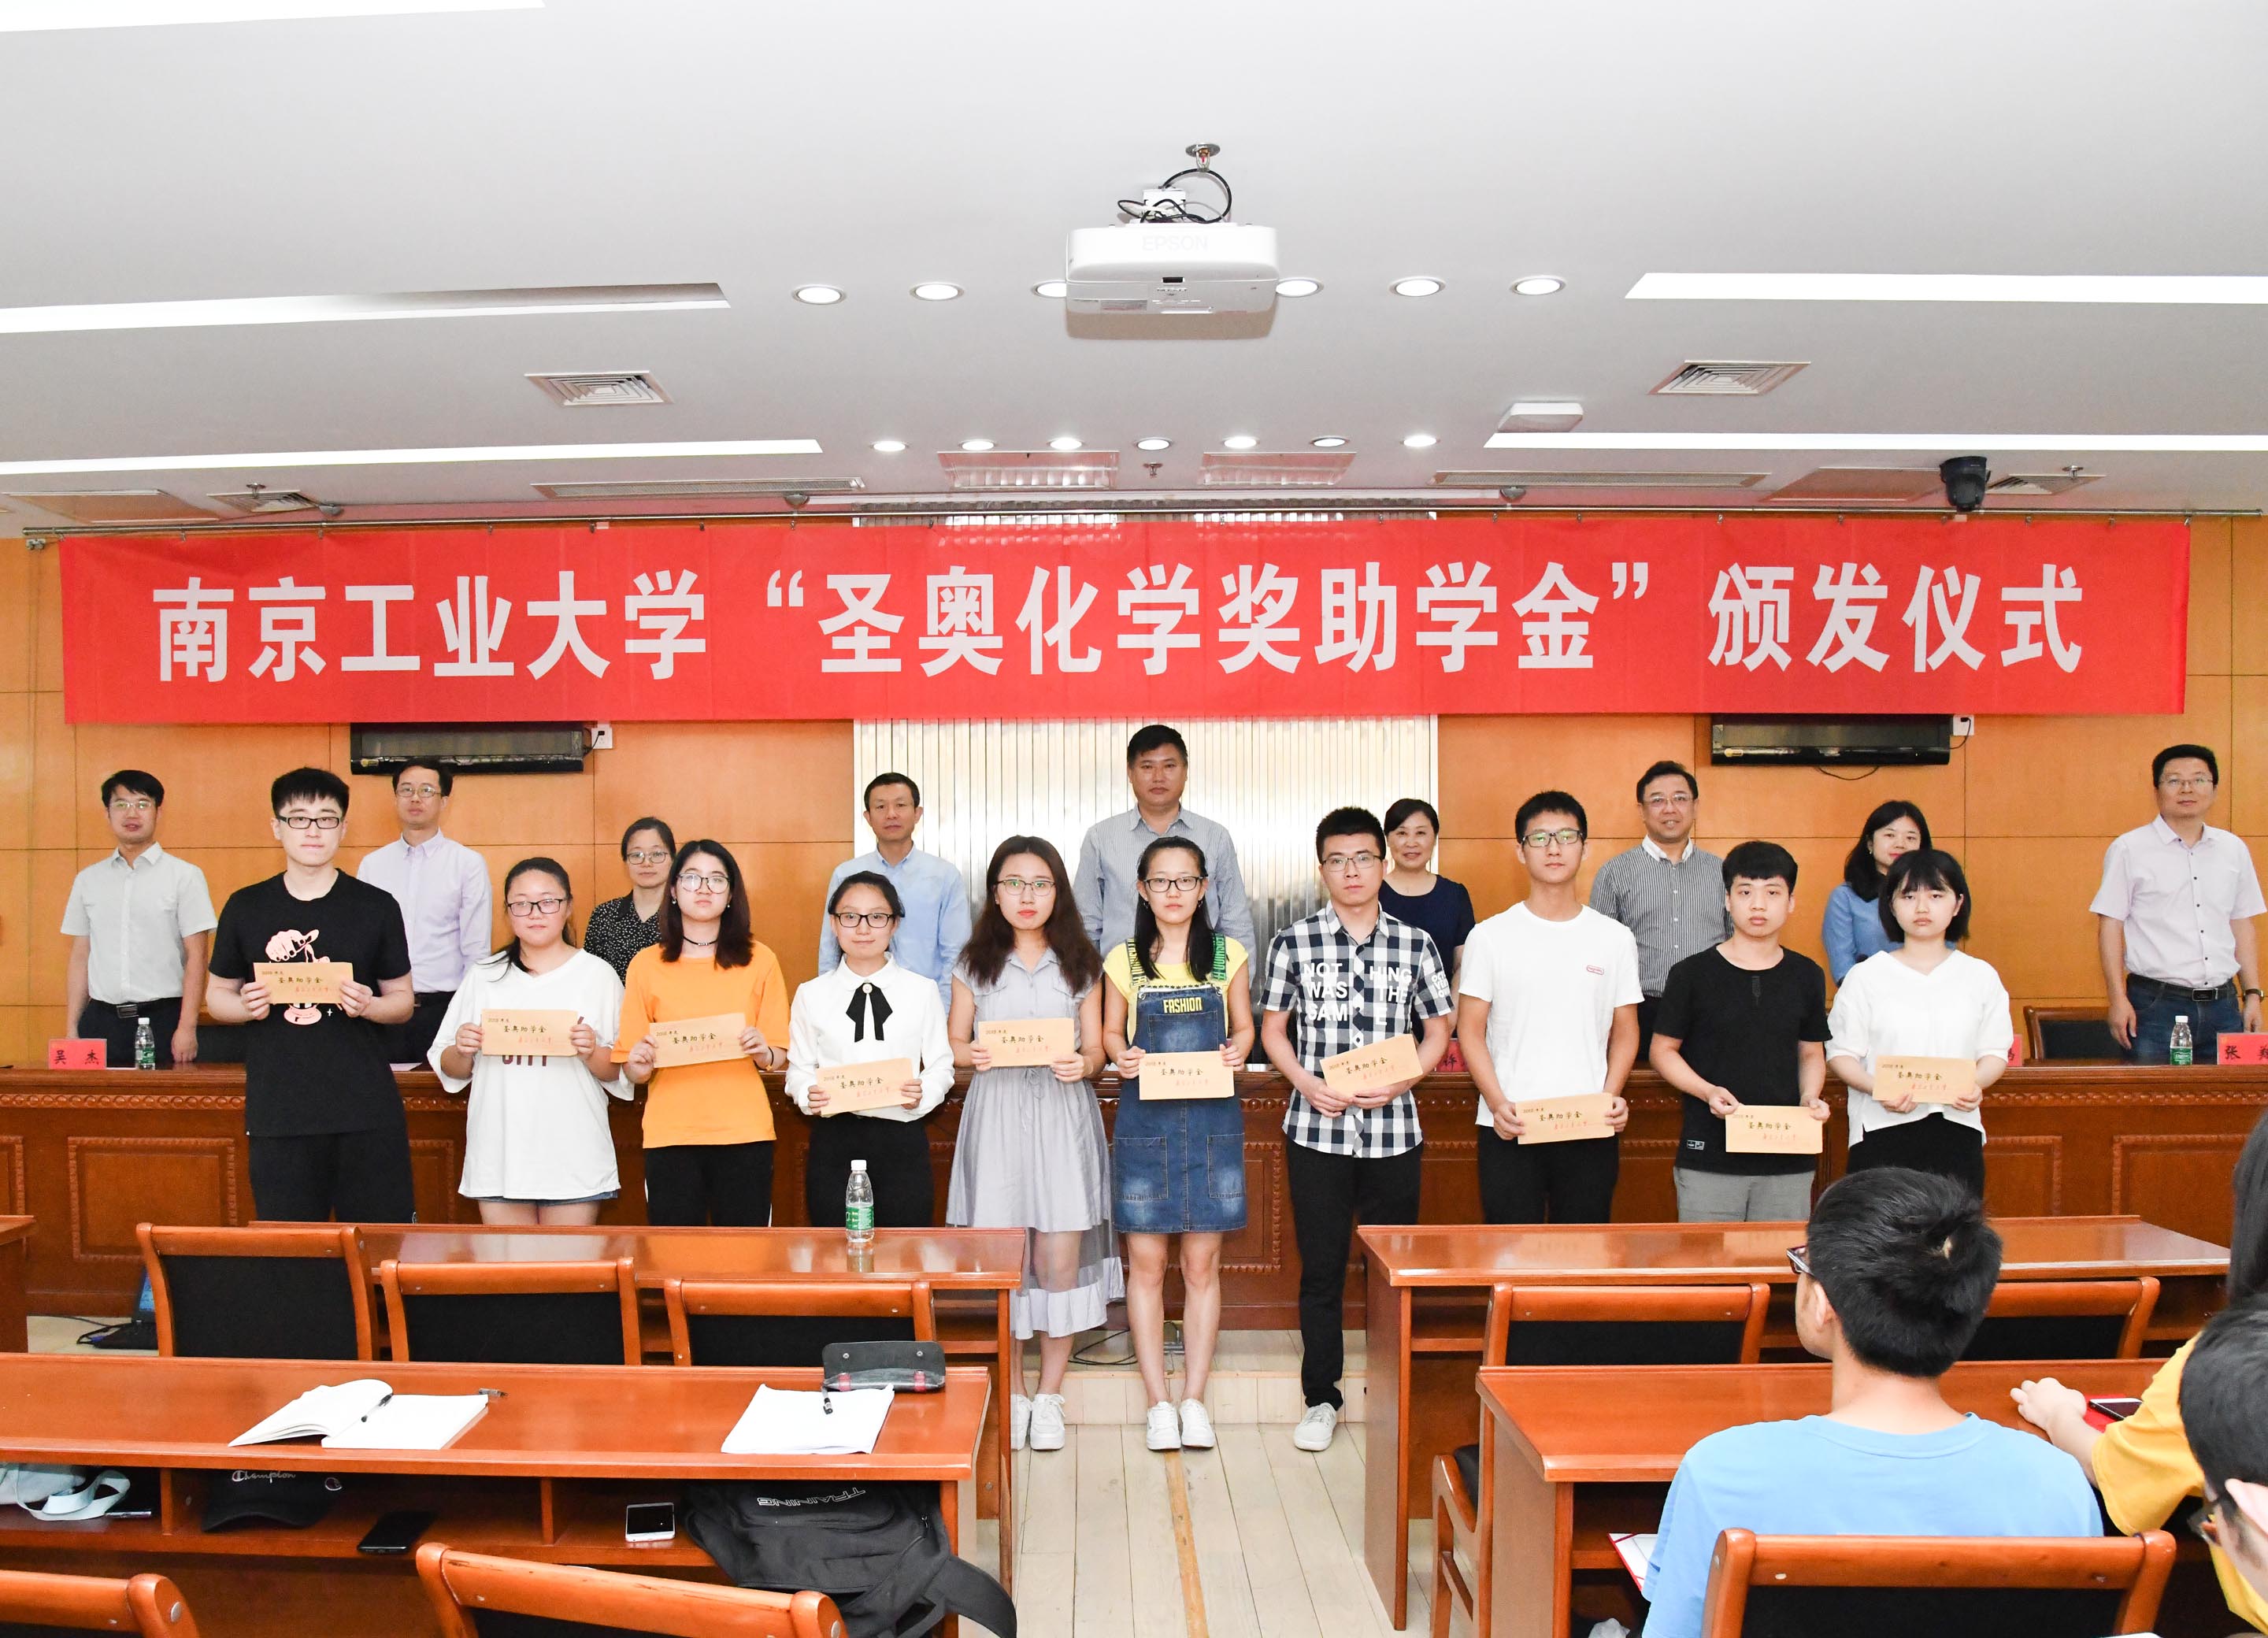 Sennics Awarded 2018 Grants and Scholarships to Students from Nanjing Tech University 